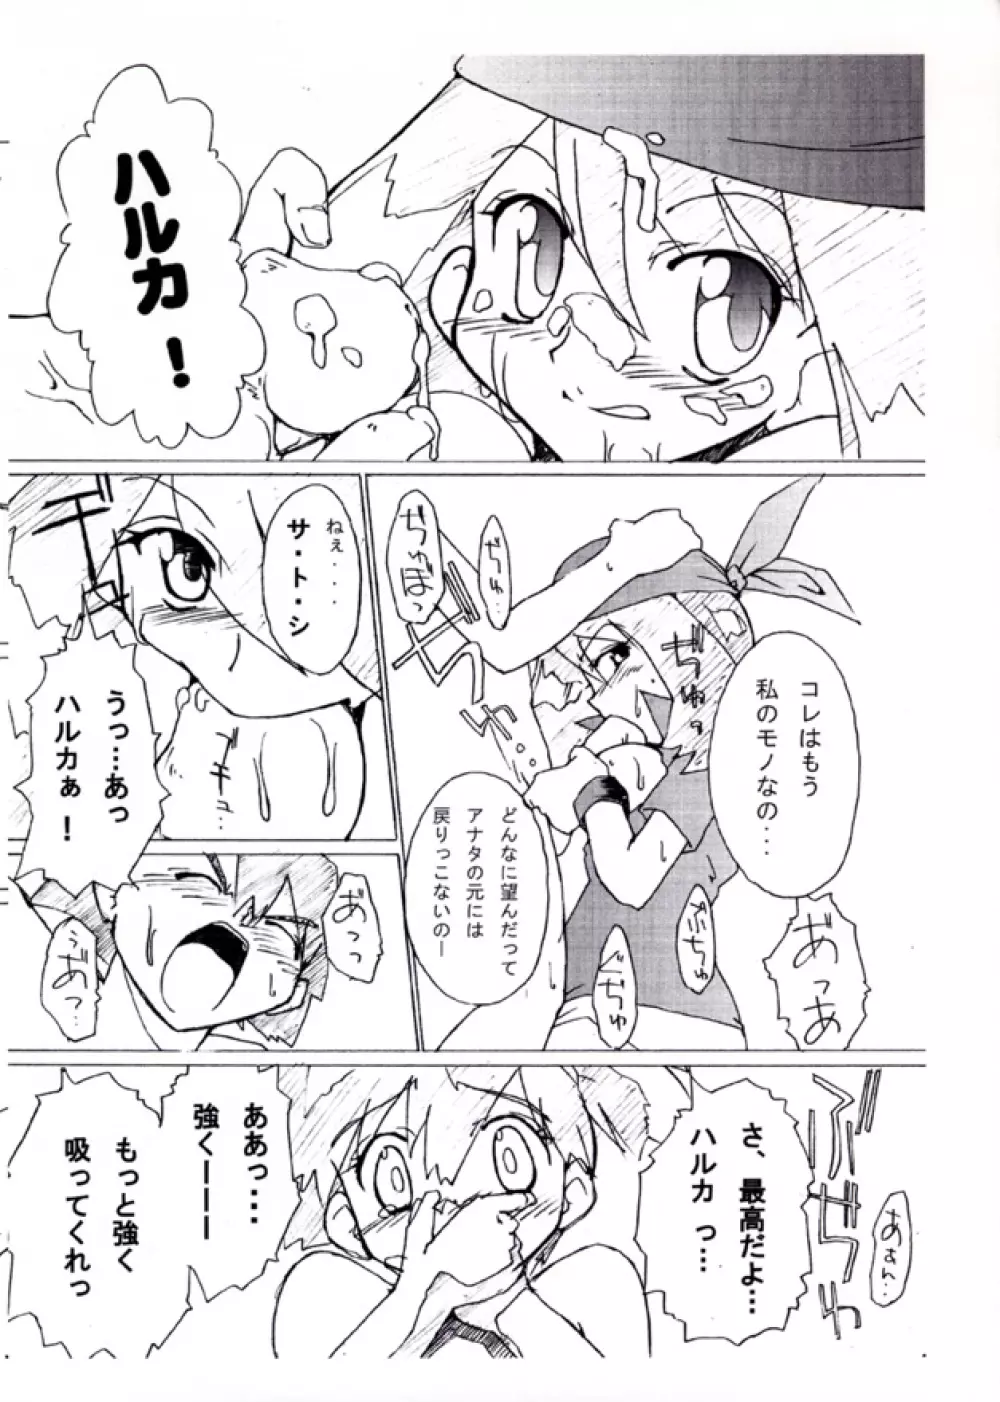 KASUMIX XPLOSION Kasumi Comic part5 - page29